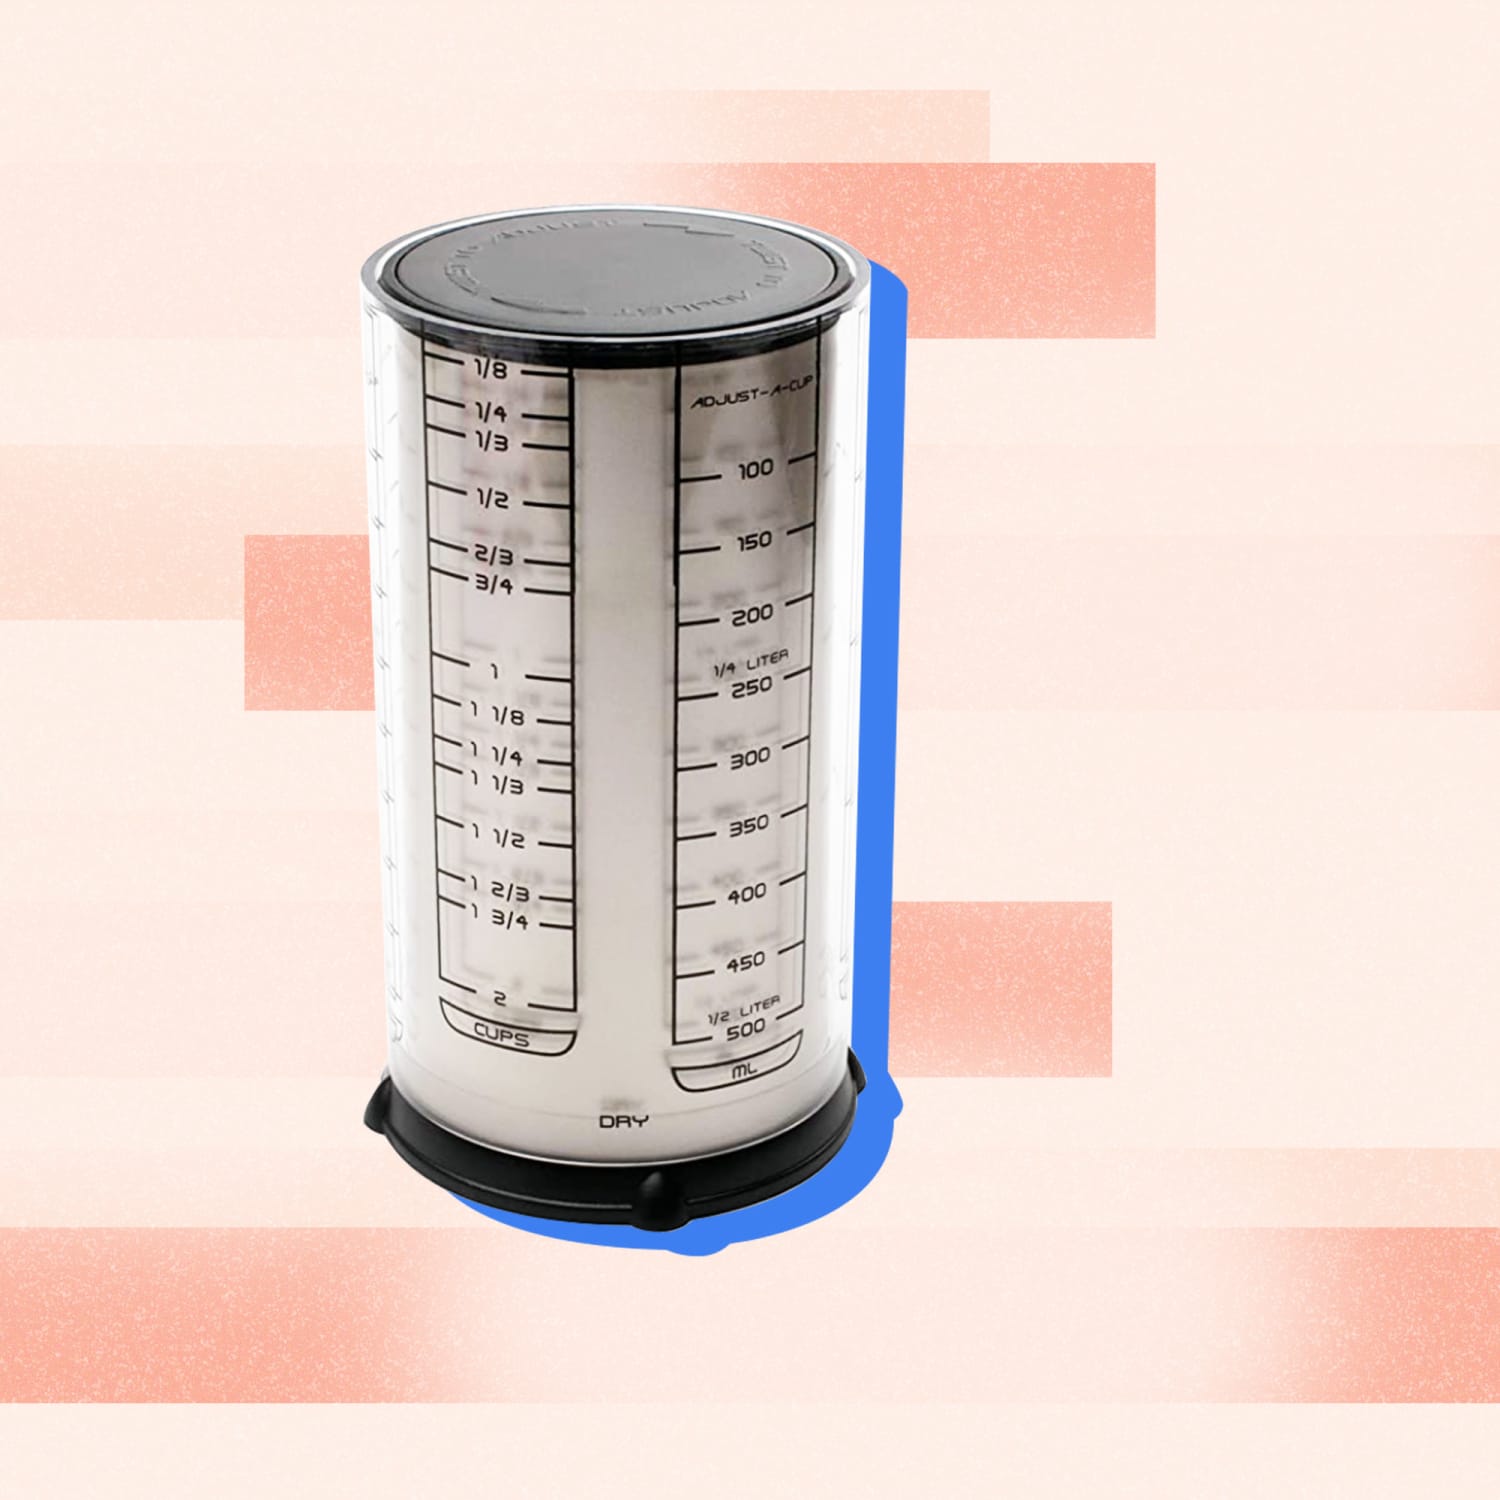 Should I Buy an Adjustable Measuring Cup?